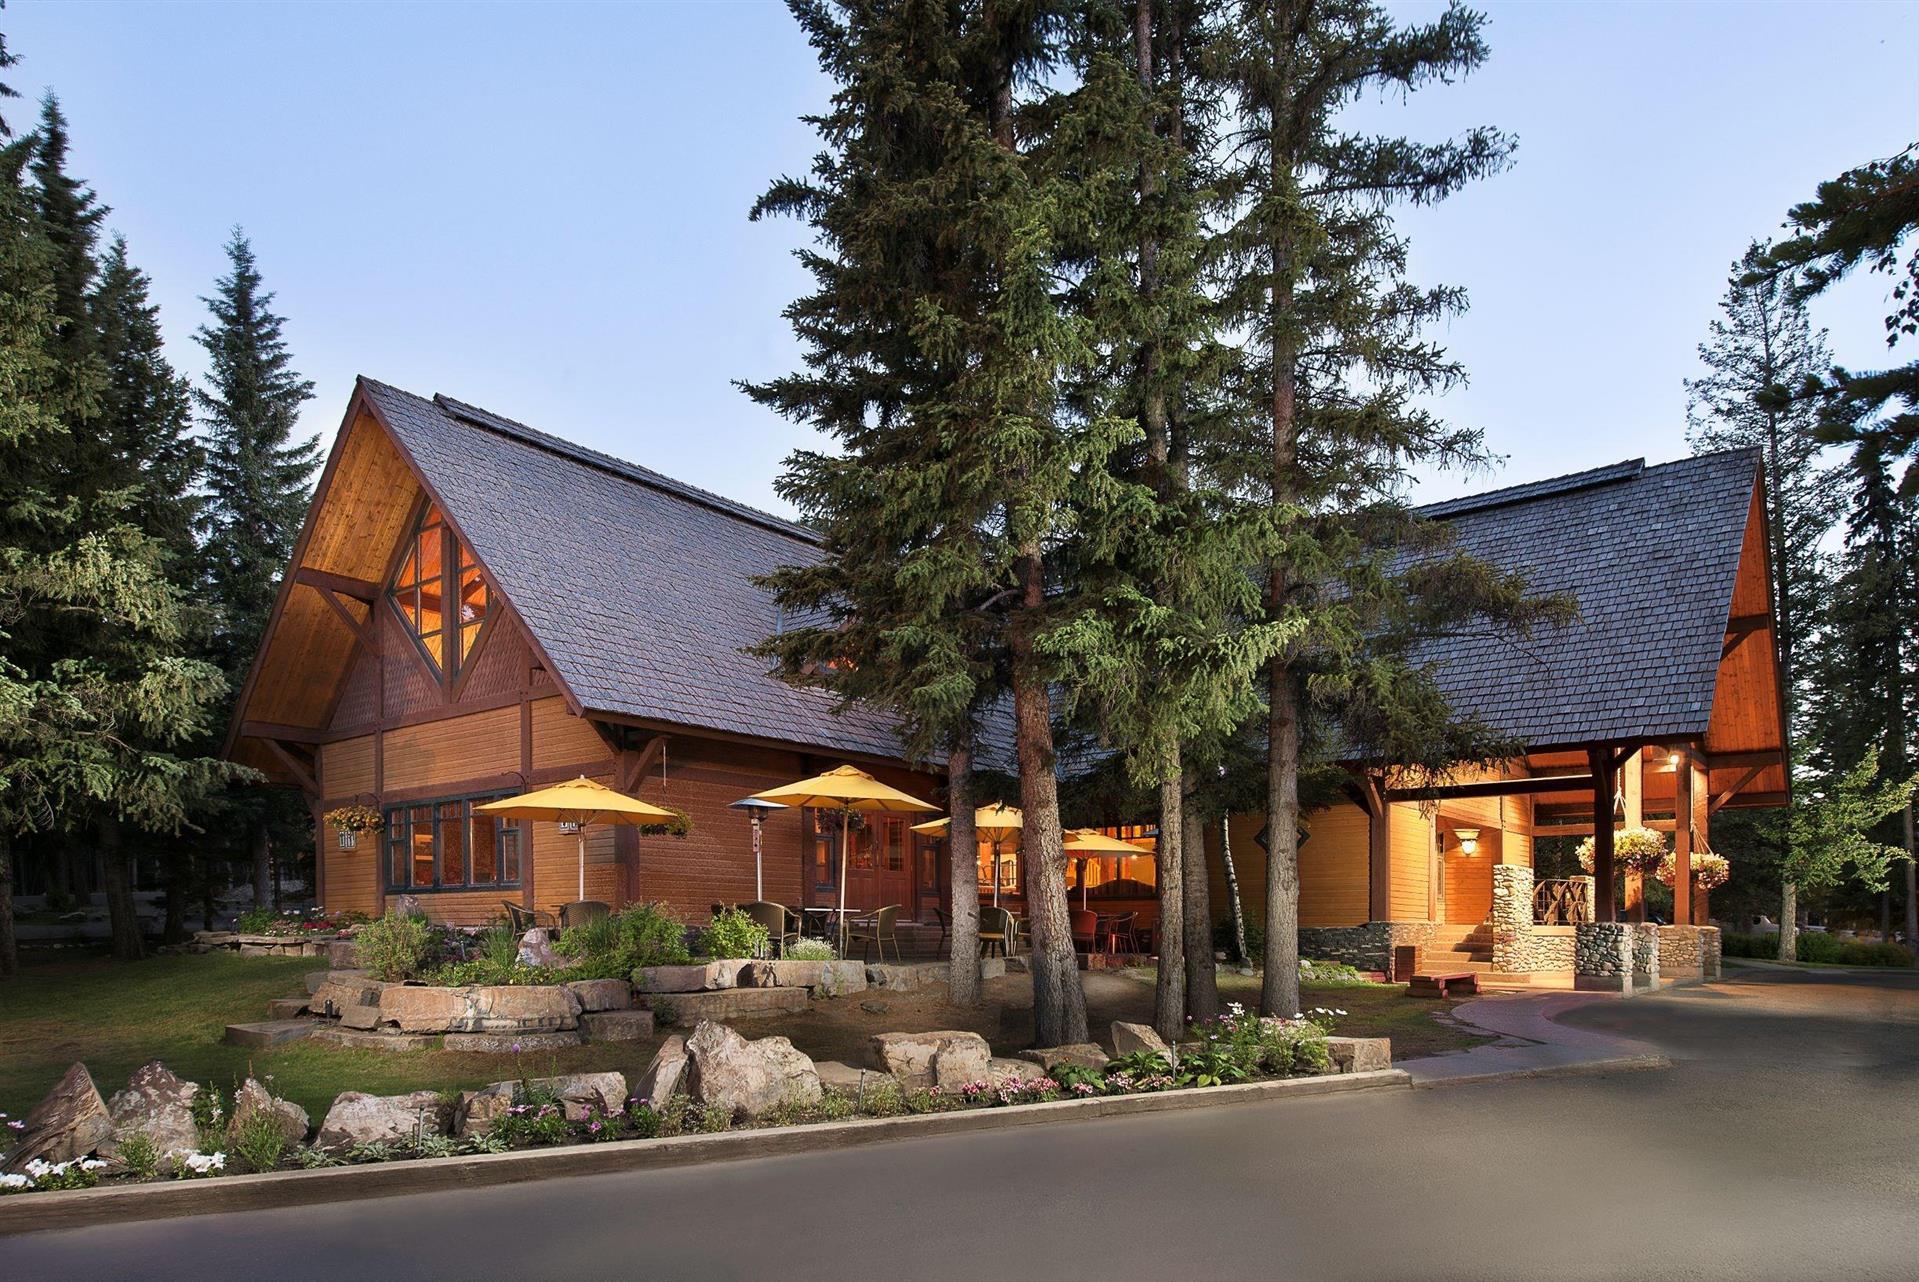 Buffalo Mountain Lodge in Canmore, AB